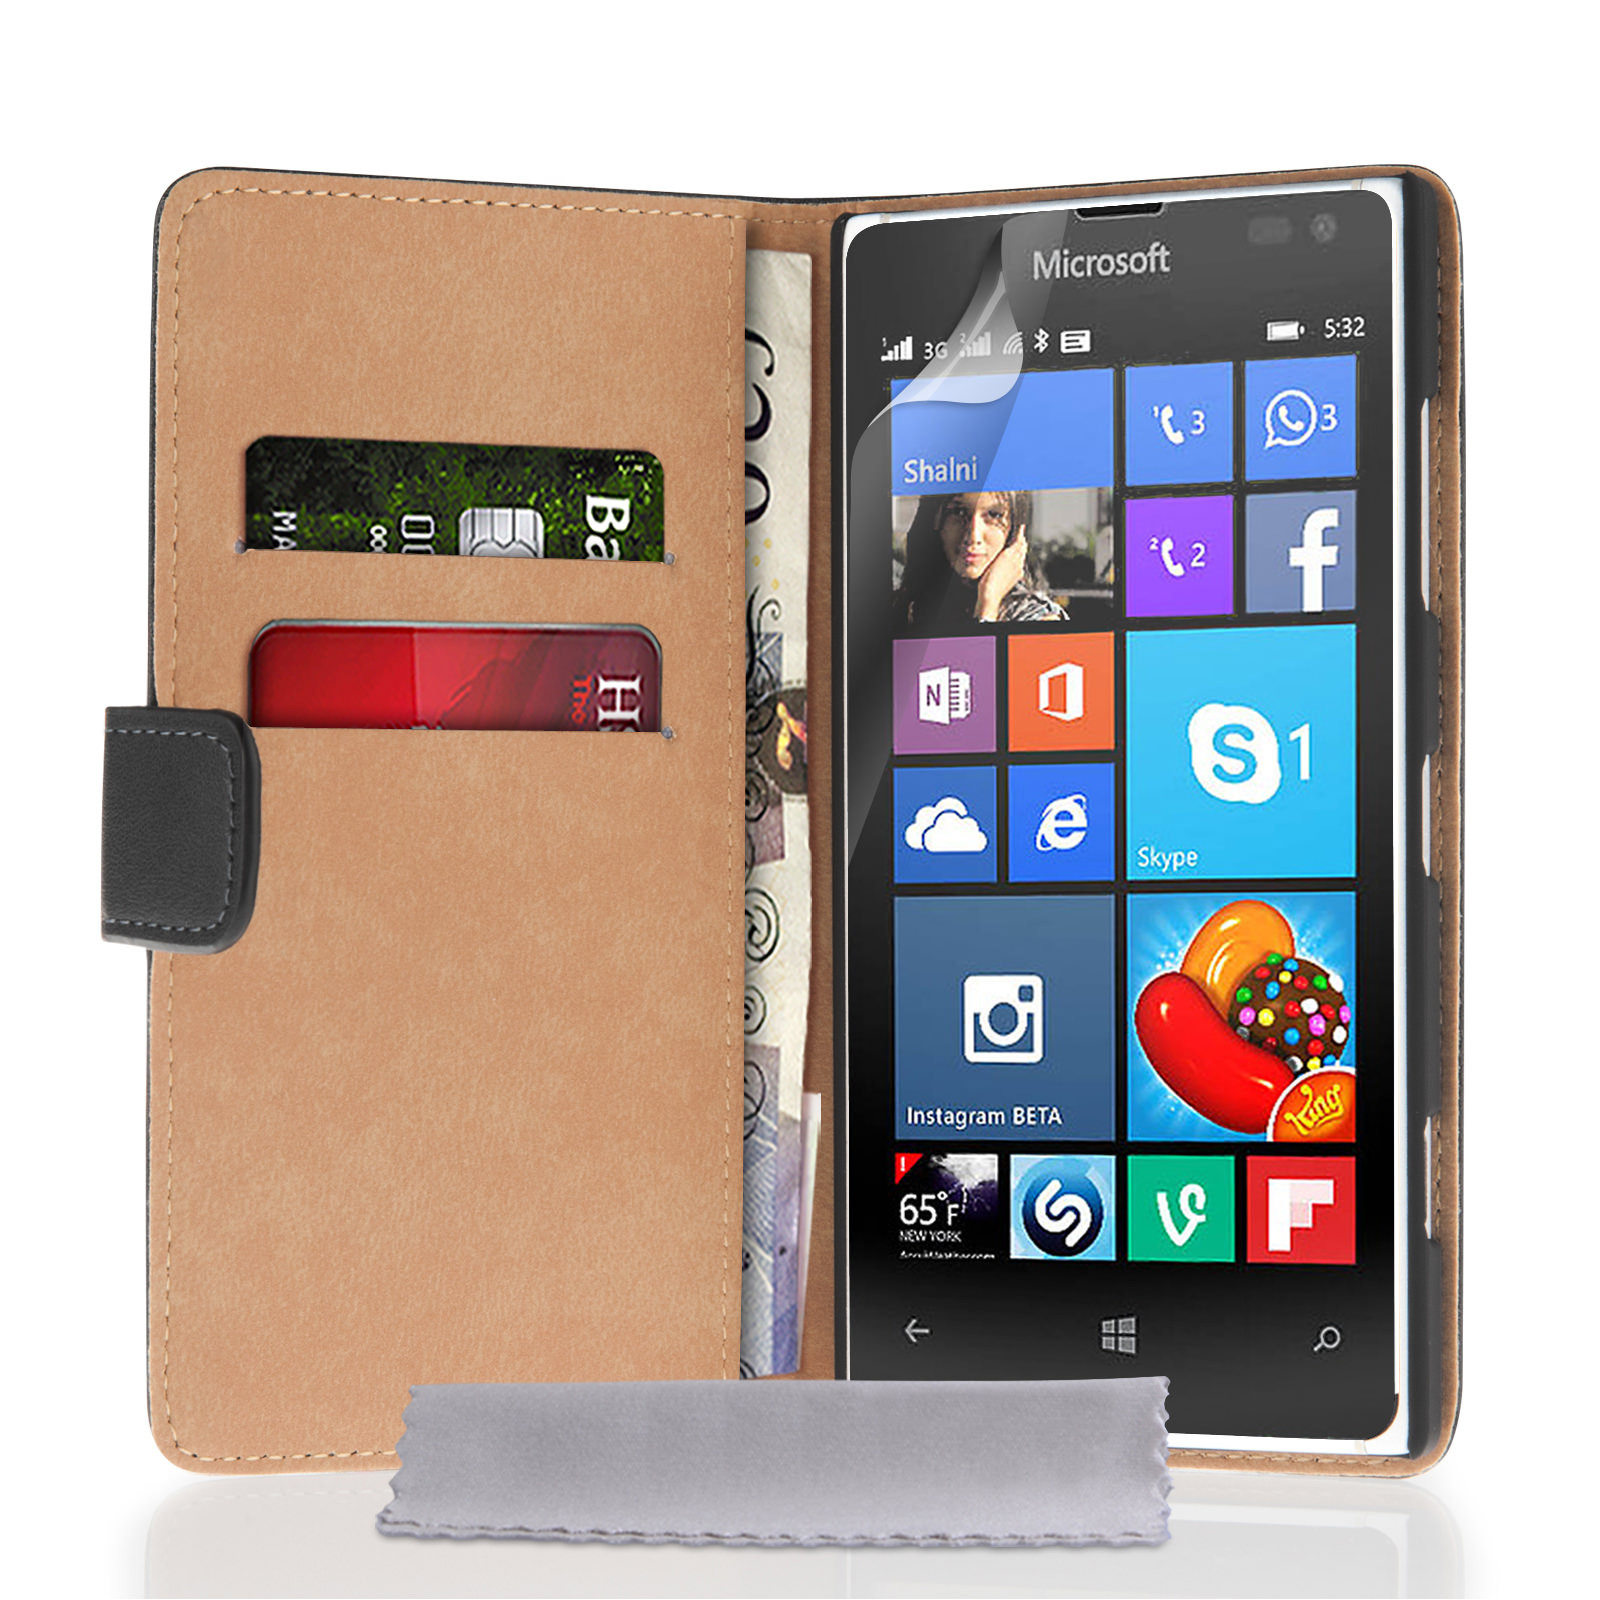 Caseflex Microsoft Lumia 532 Real Leather Wallet Case - Black